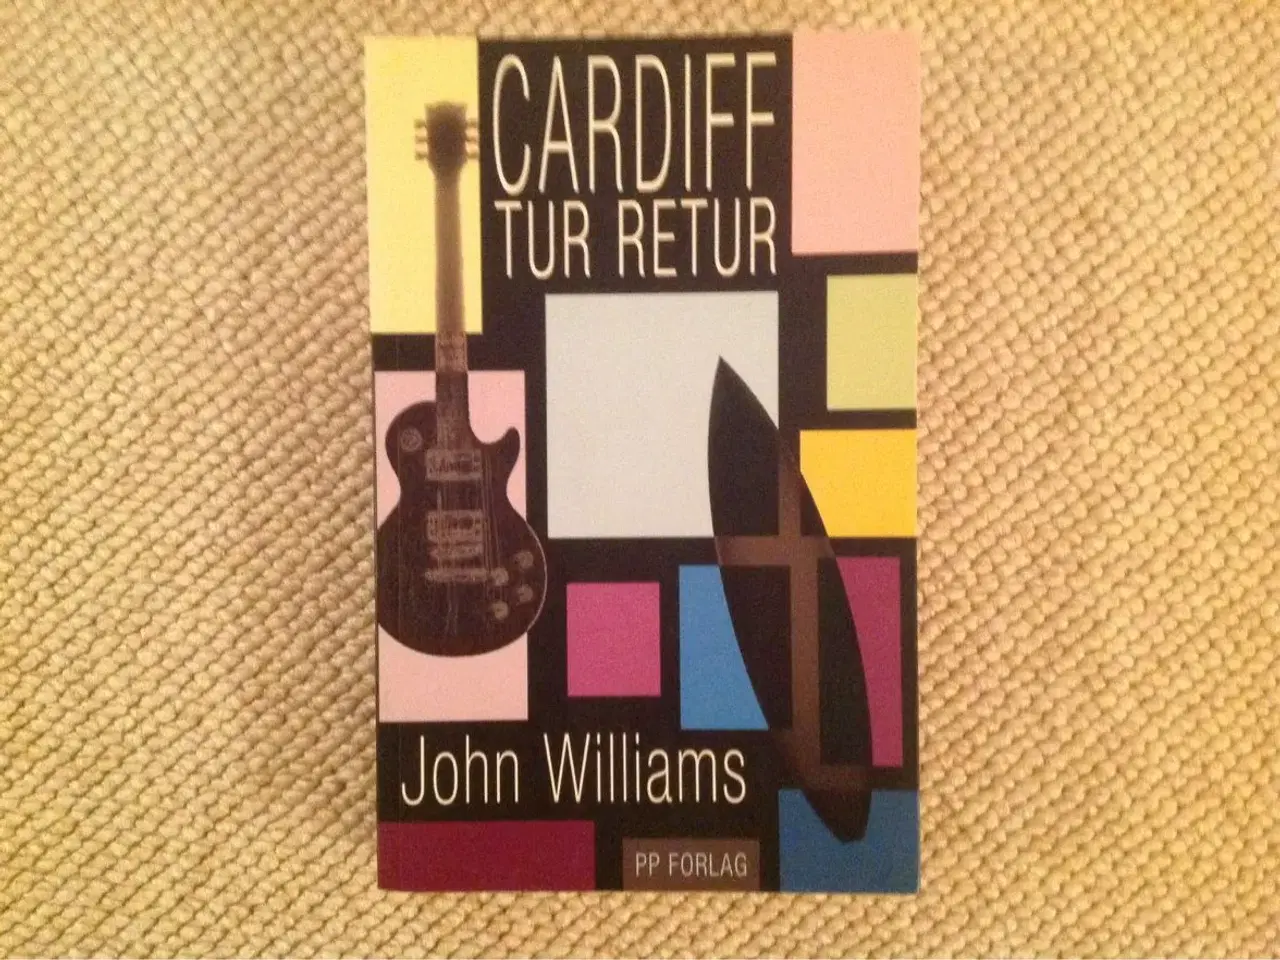 Billede 1 - Cardiff tur retur" af John Williams